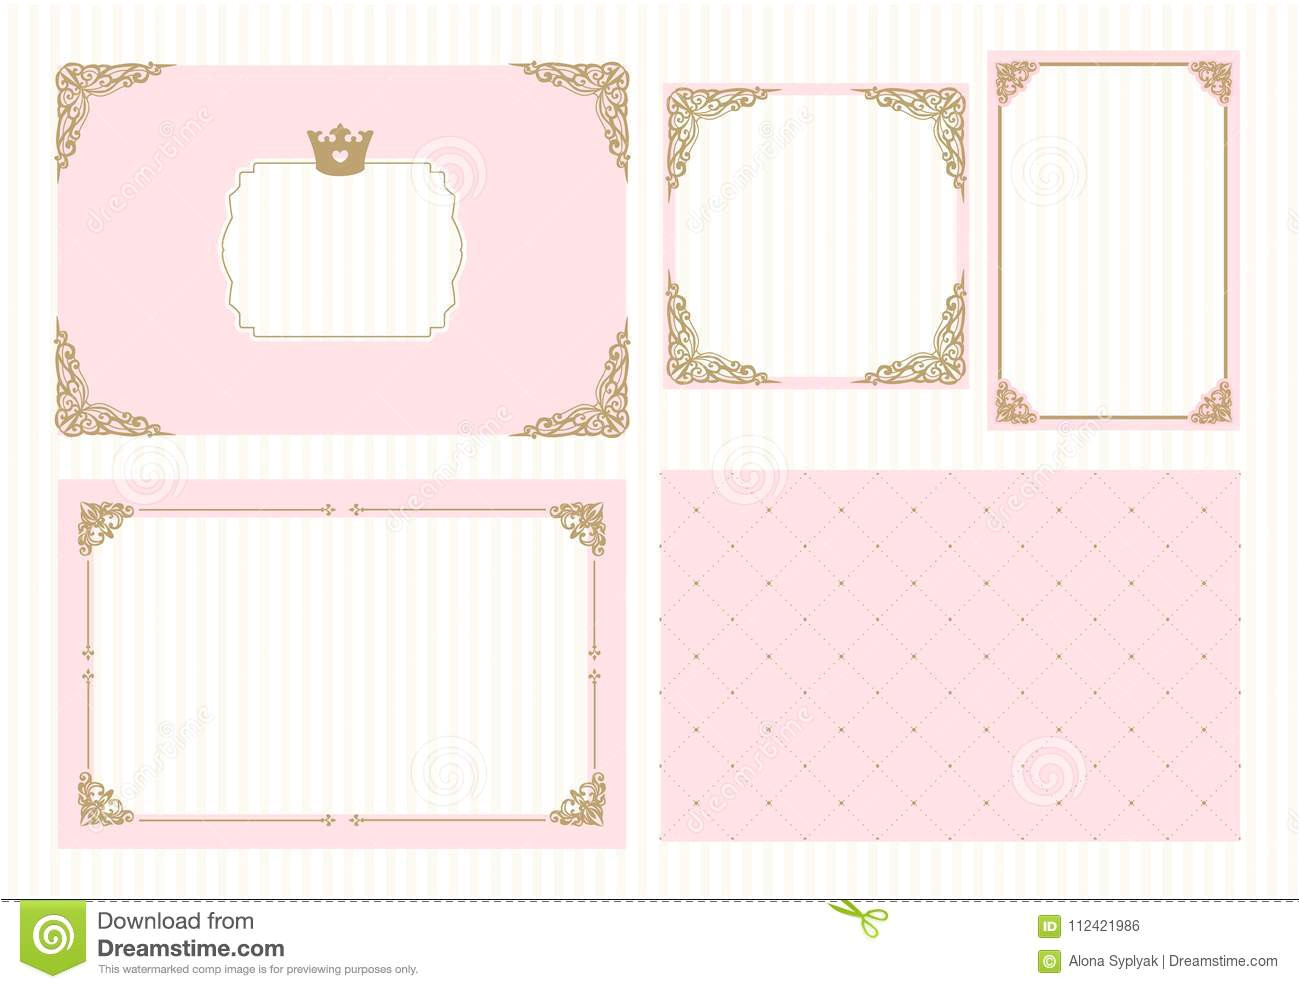 baby shower wedding girl birthday invite card cute picture border decorative golden corner set cute pink templates image112421986